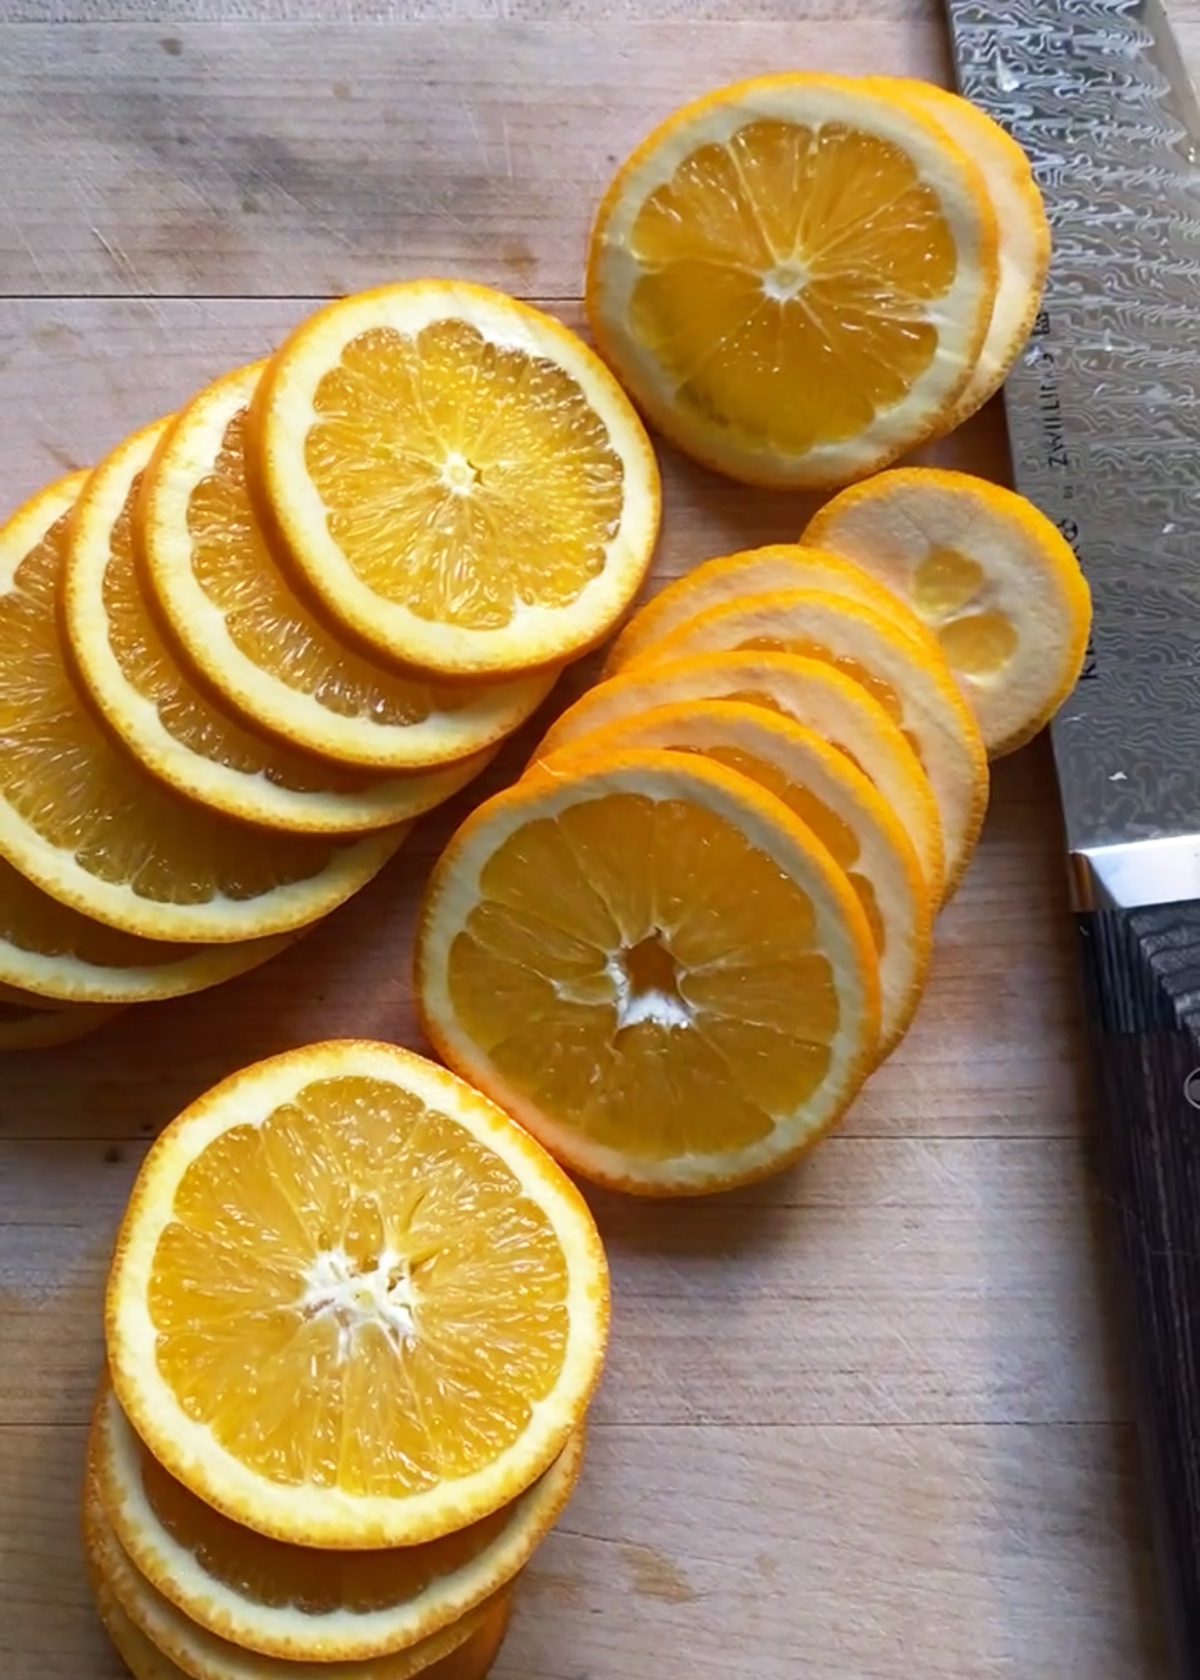 ¼-inch orange slices on wooden cutting board